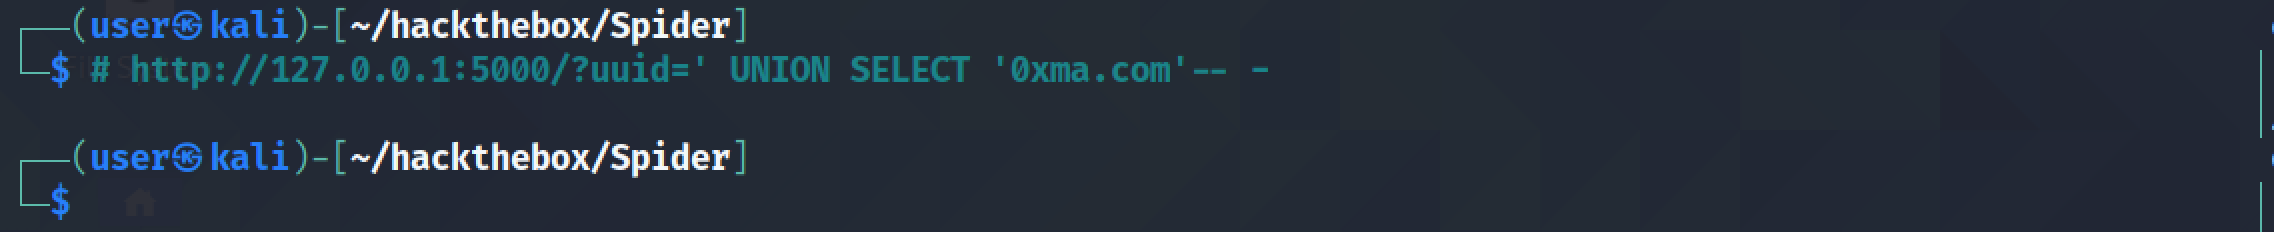 Adding 0xma.com to the UNION statement.